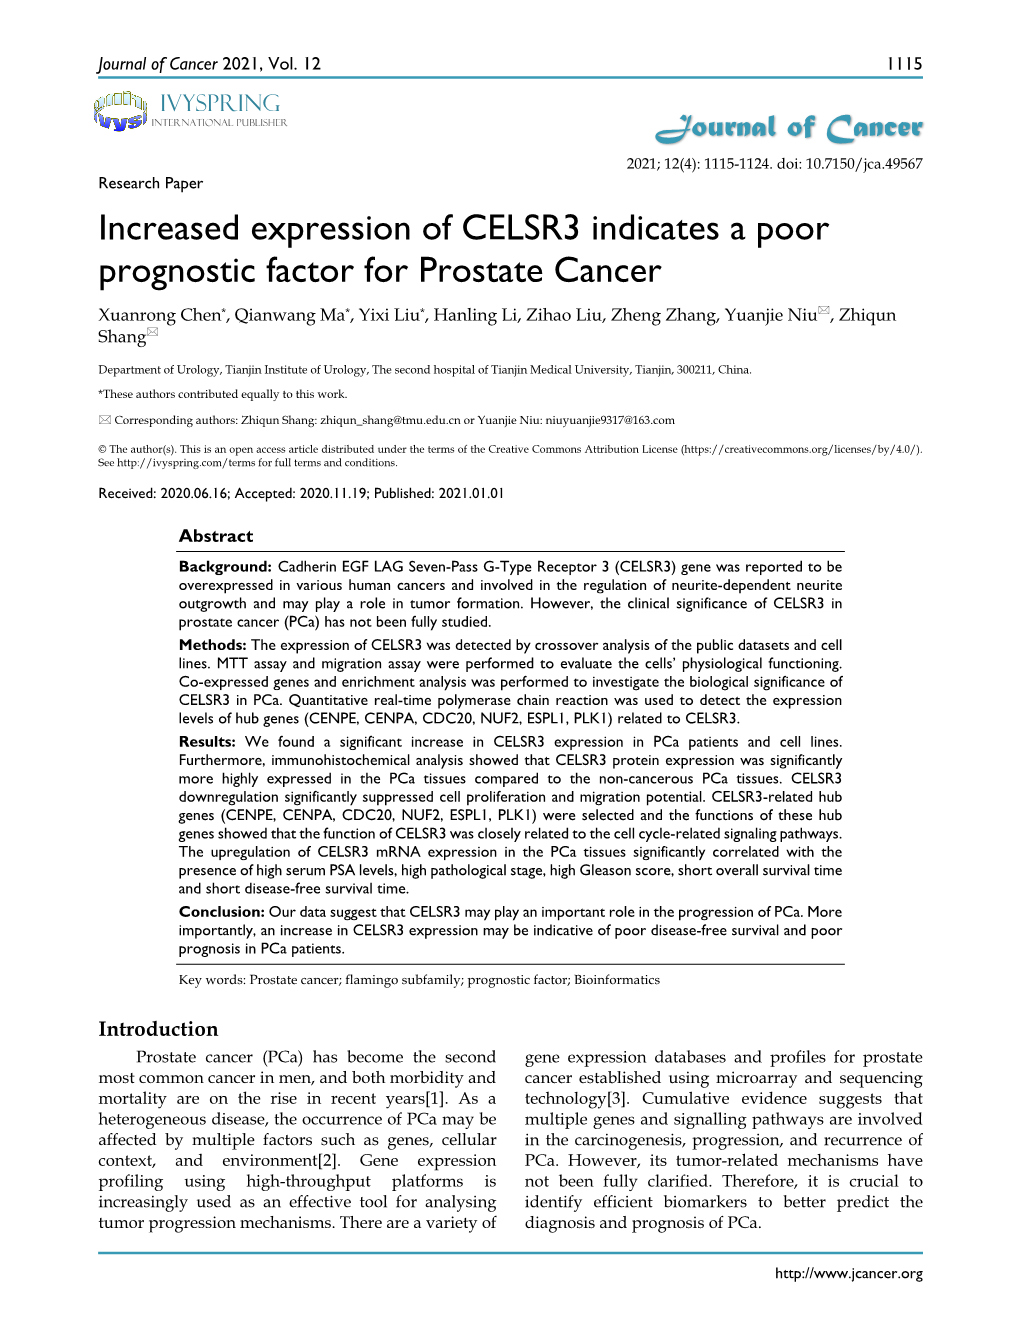 Increased Expression of CELSR3 Indicates a Poor Prognostic Factor